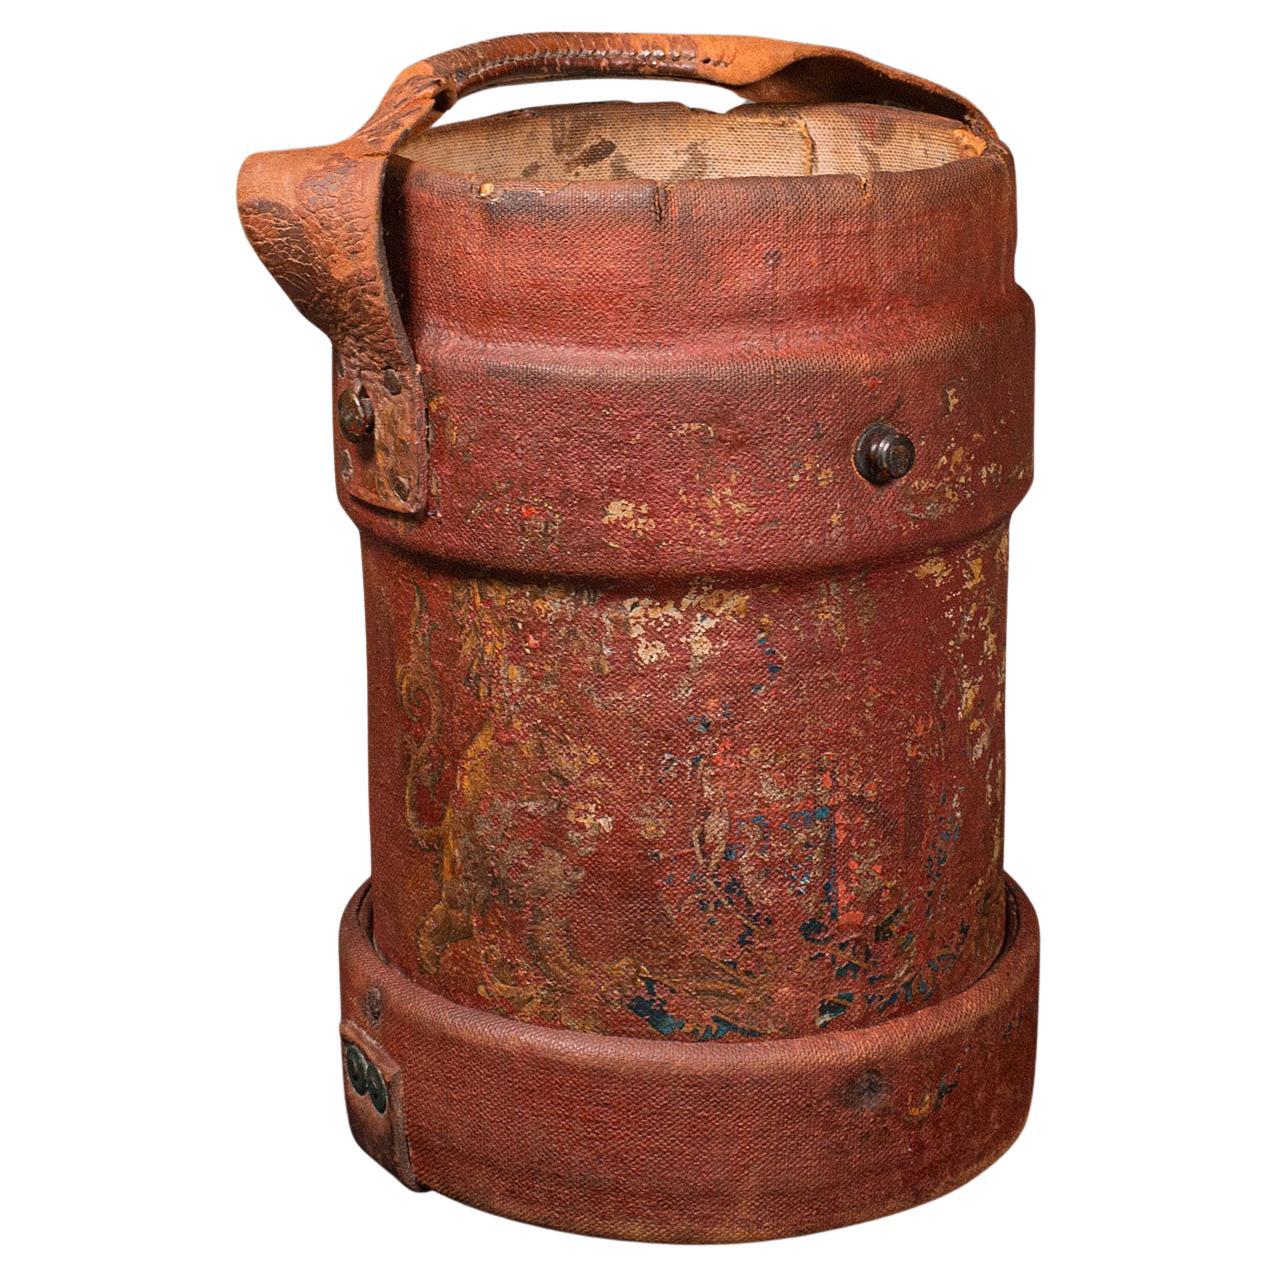 Antique Decorative Bucket, English, Canvas, Leather, Log Bin, Storage, Edwardian